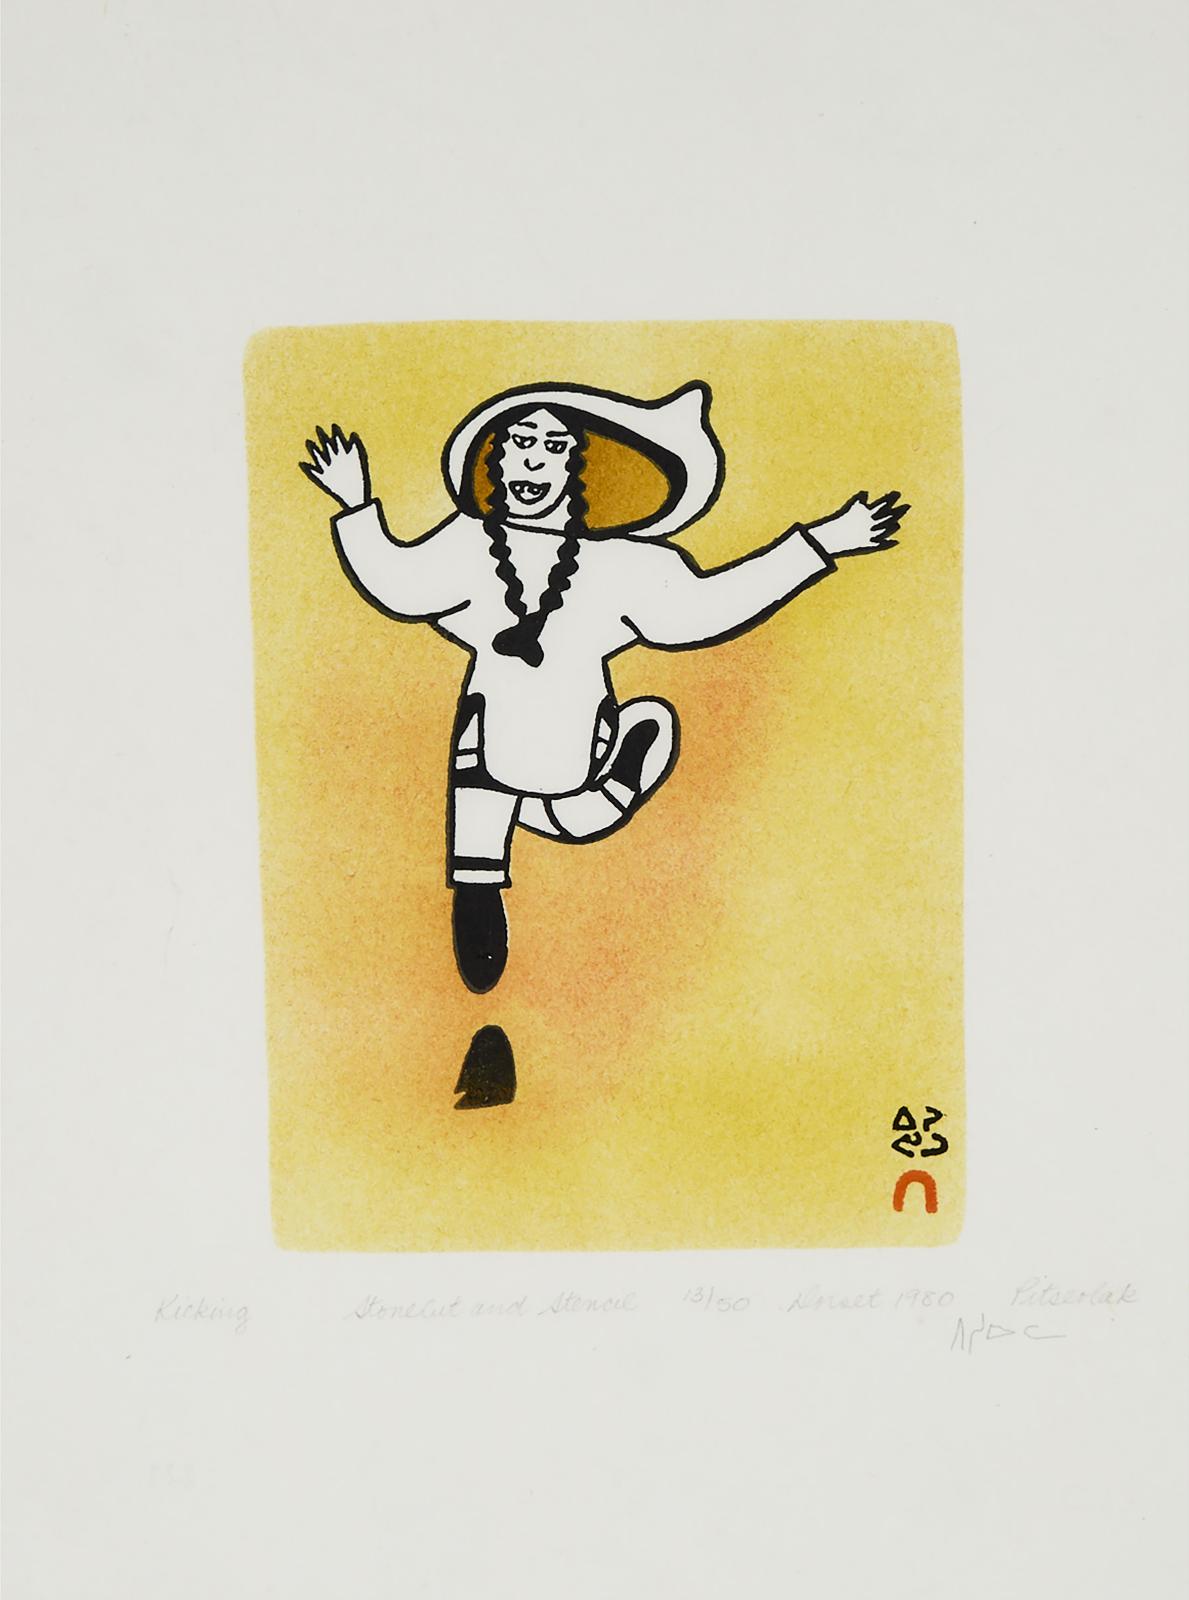 Pitseolak Ashoona (1904-1983) - Kicking